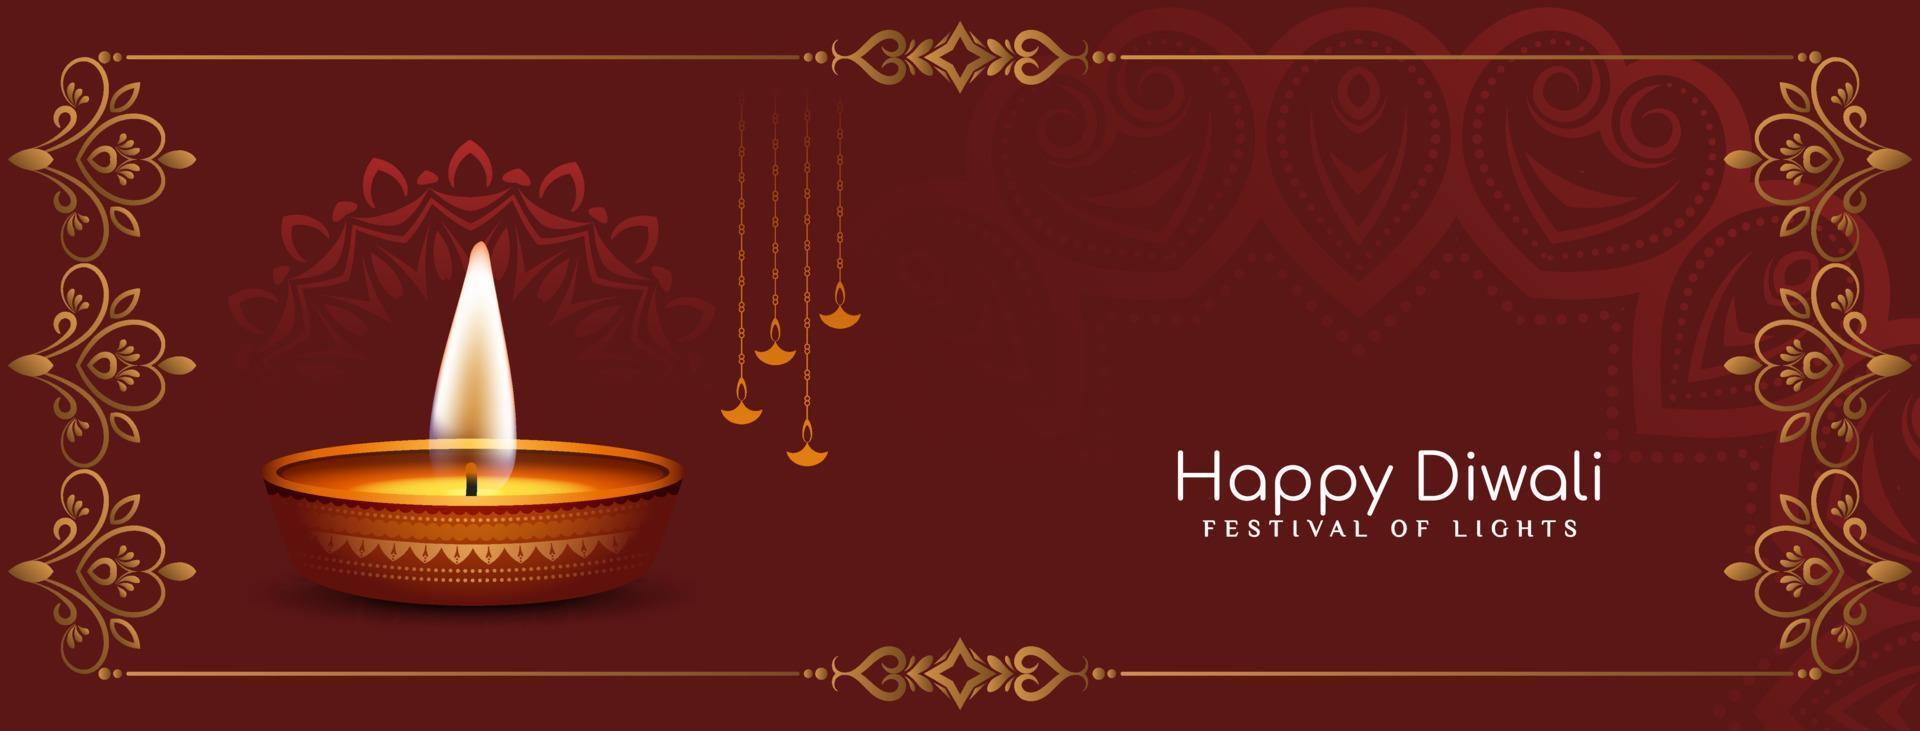 feliz diwali festival religioso celebración artística hermosa pancarta vector